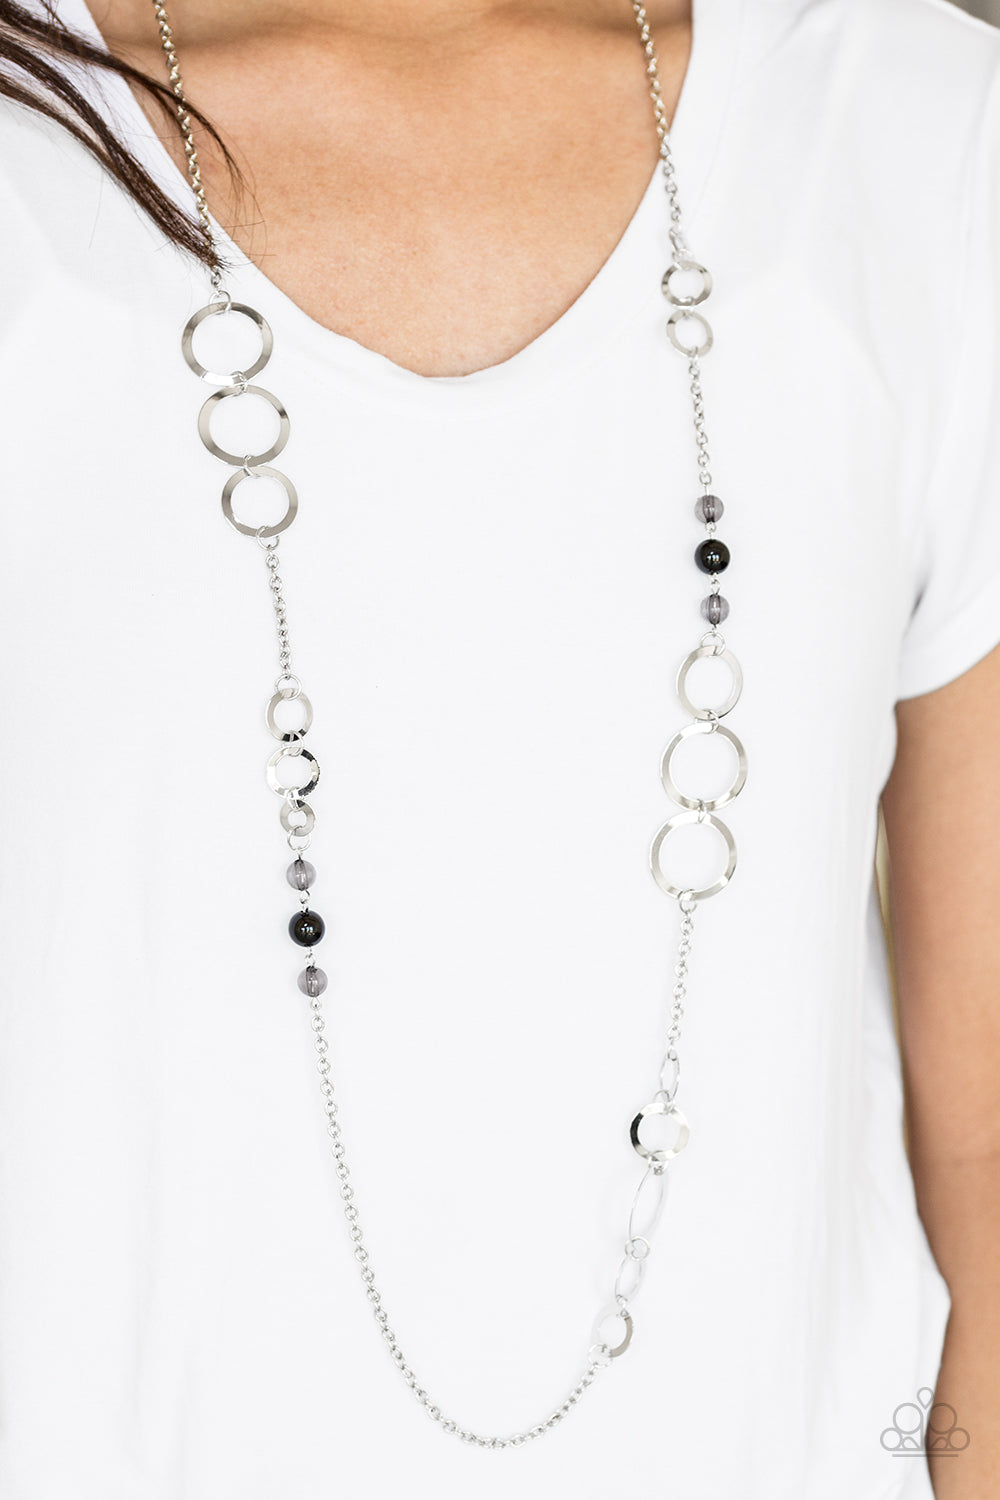 The GLOW-est of the GLOW - black - Paparazzi necklace